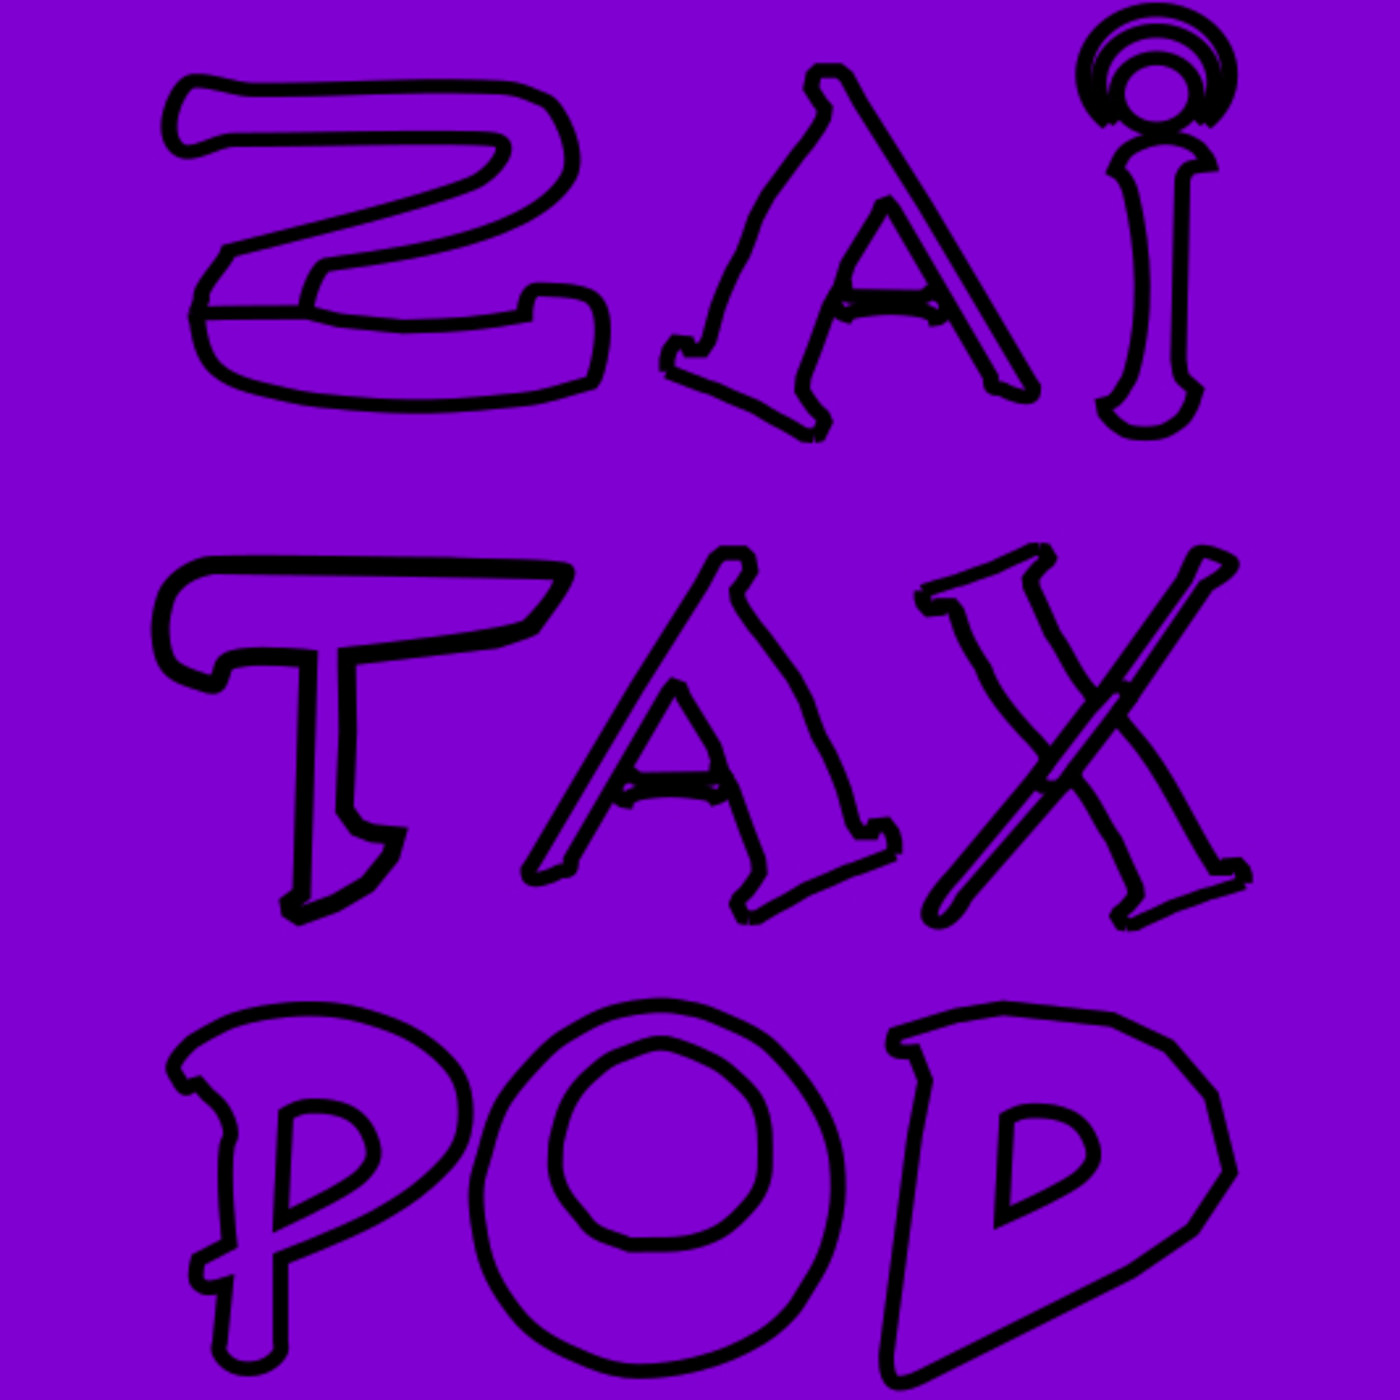 ZaiTax Podcast 6